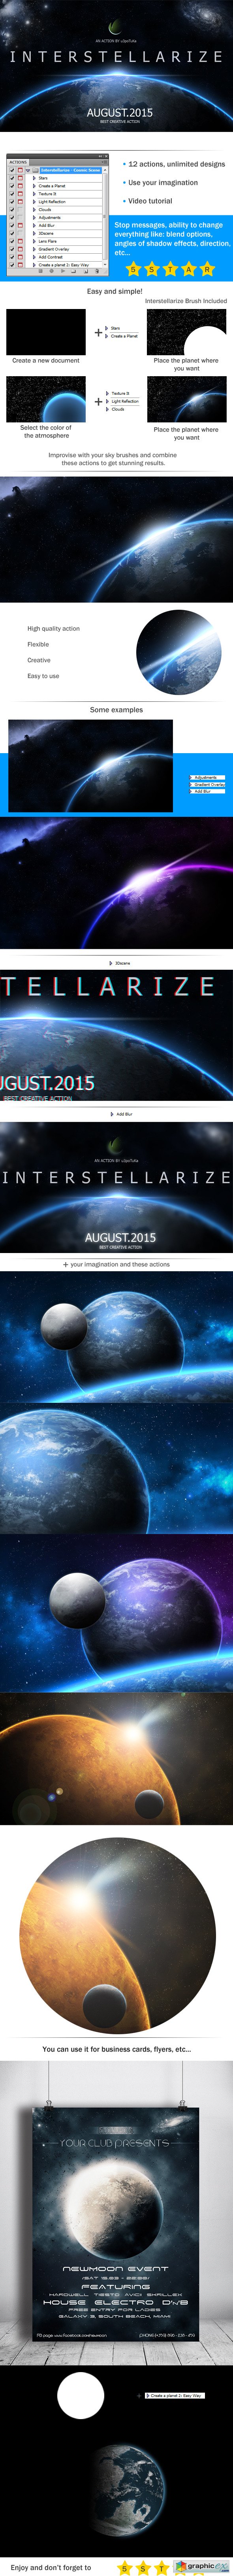 Interstellarize - Cosmic Scene Action